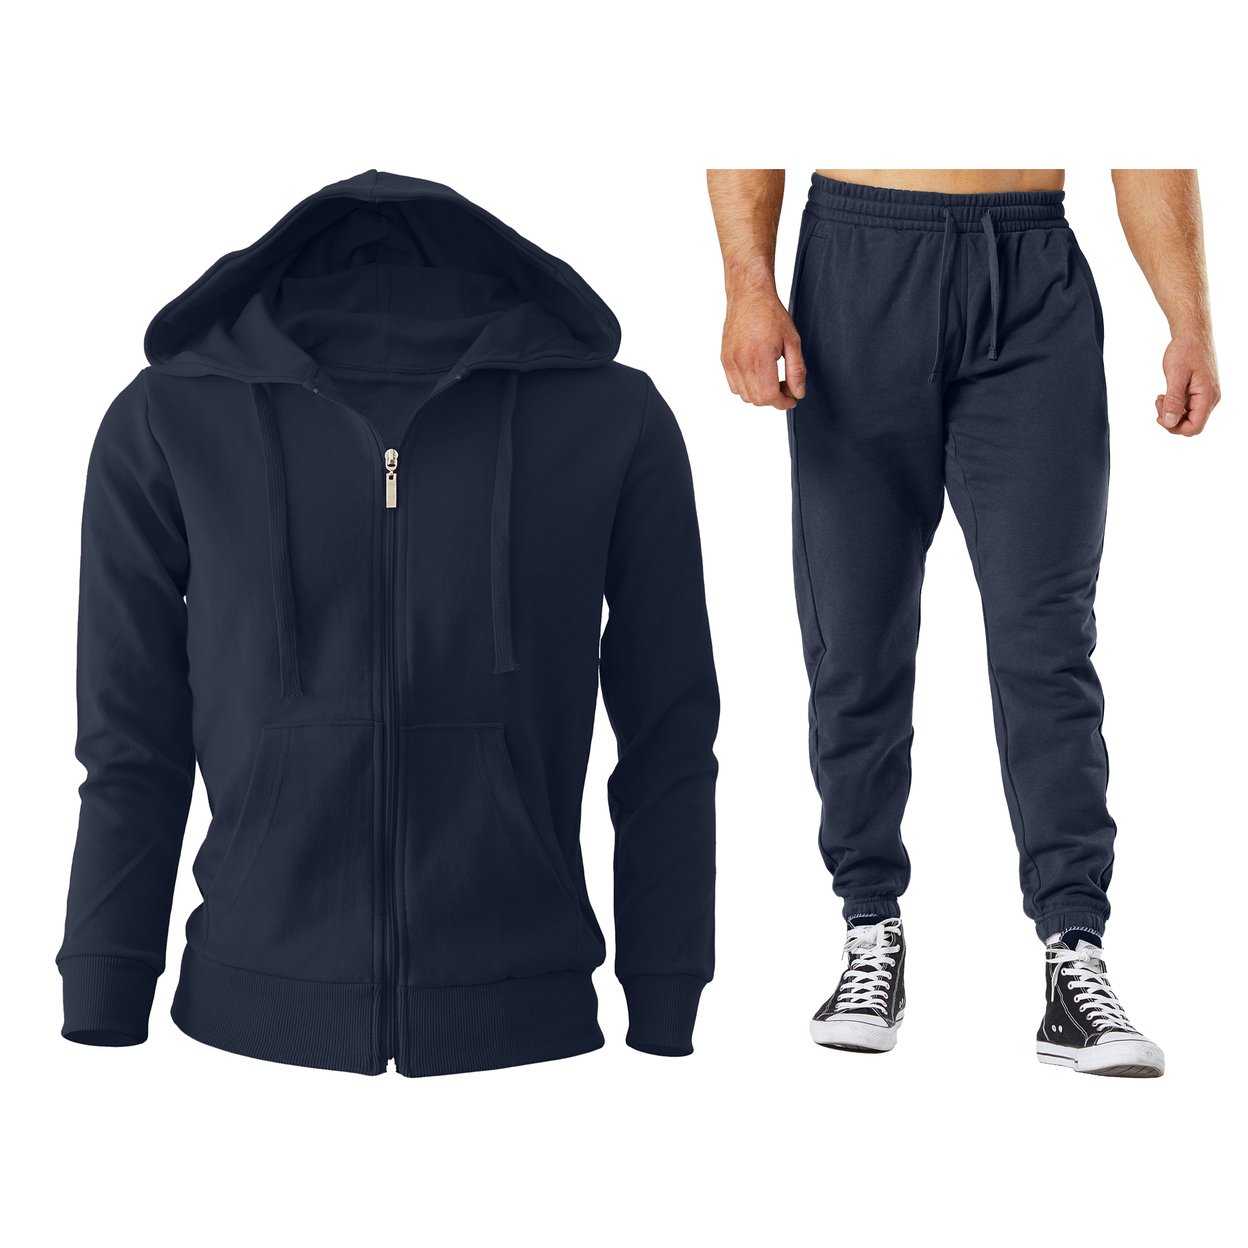 4-Piece: Men's Winter Warm Cozy Athletic Multi-Pockets BIG & TALL Sweatsuit Set - Grey, Medium